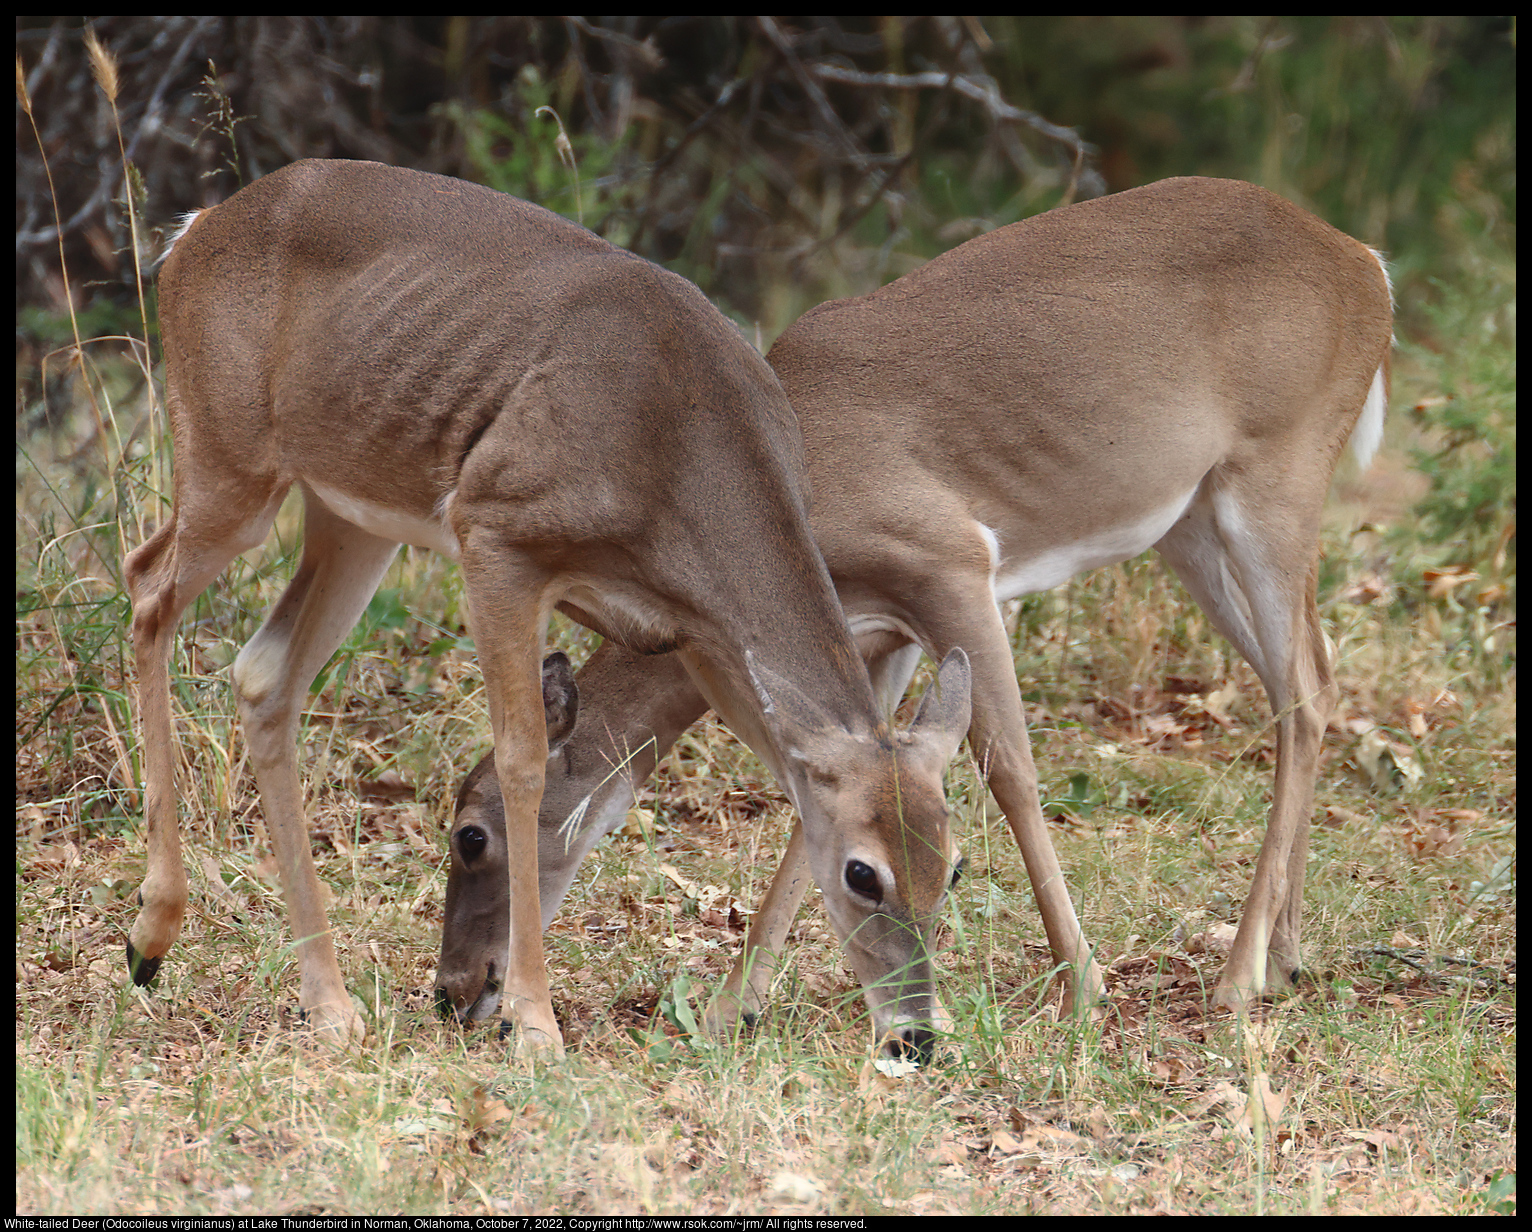 White-tailed Deer (Odocoileus virginianus) at Lake Thunderbird in Norman, Oklahoma, October 7, 2022